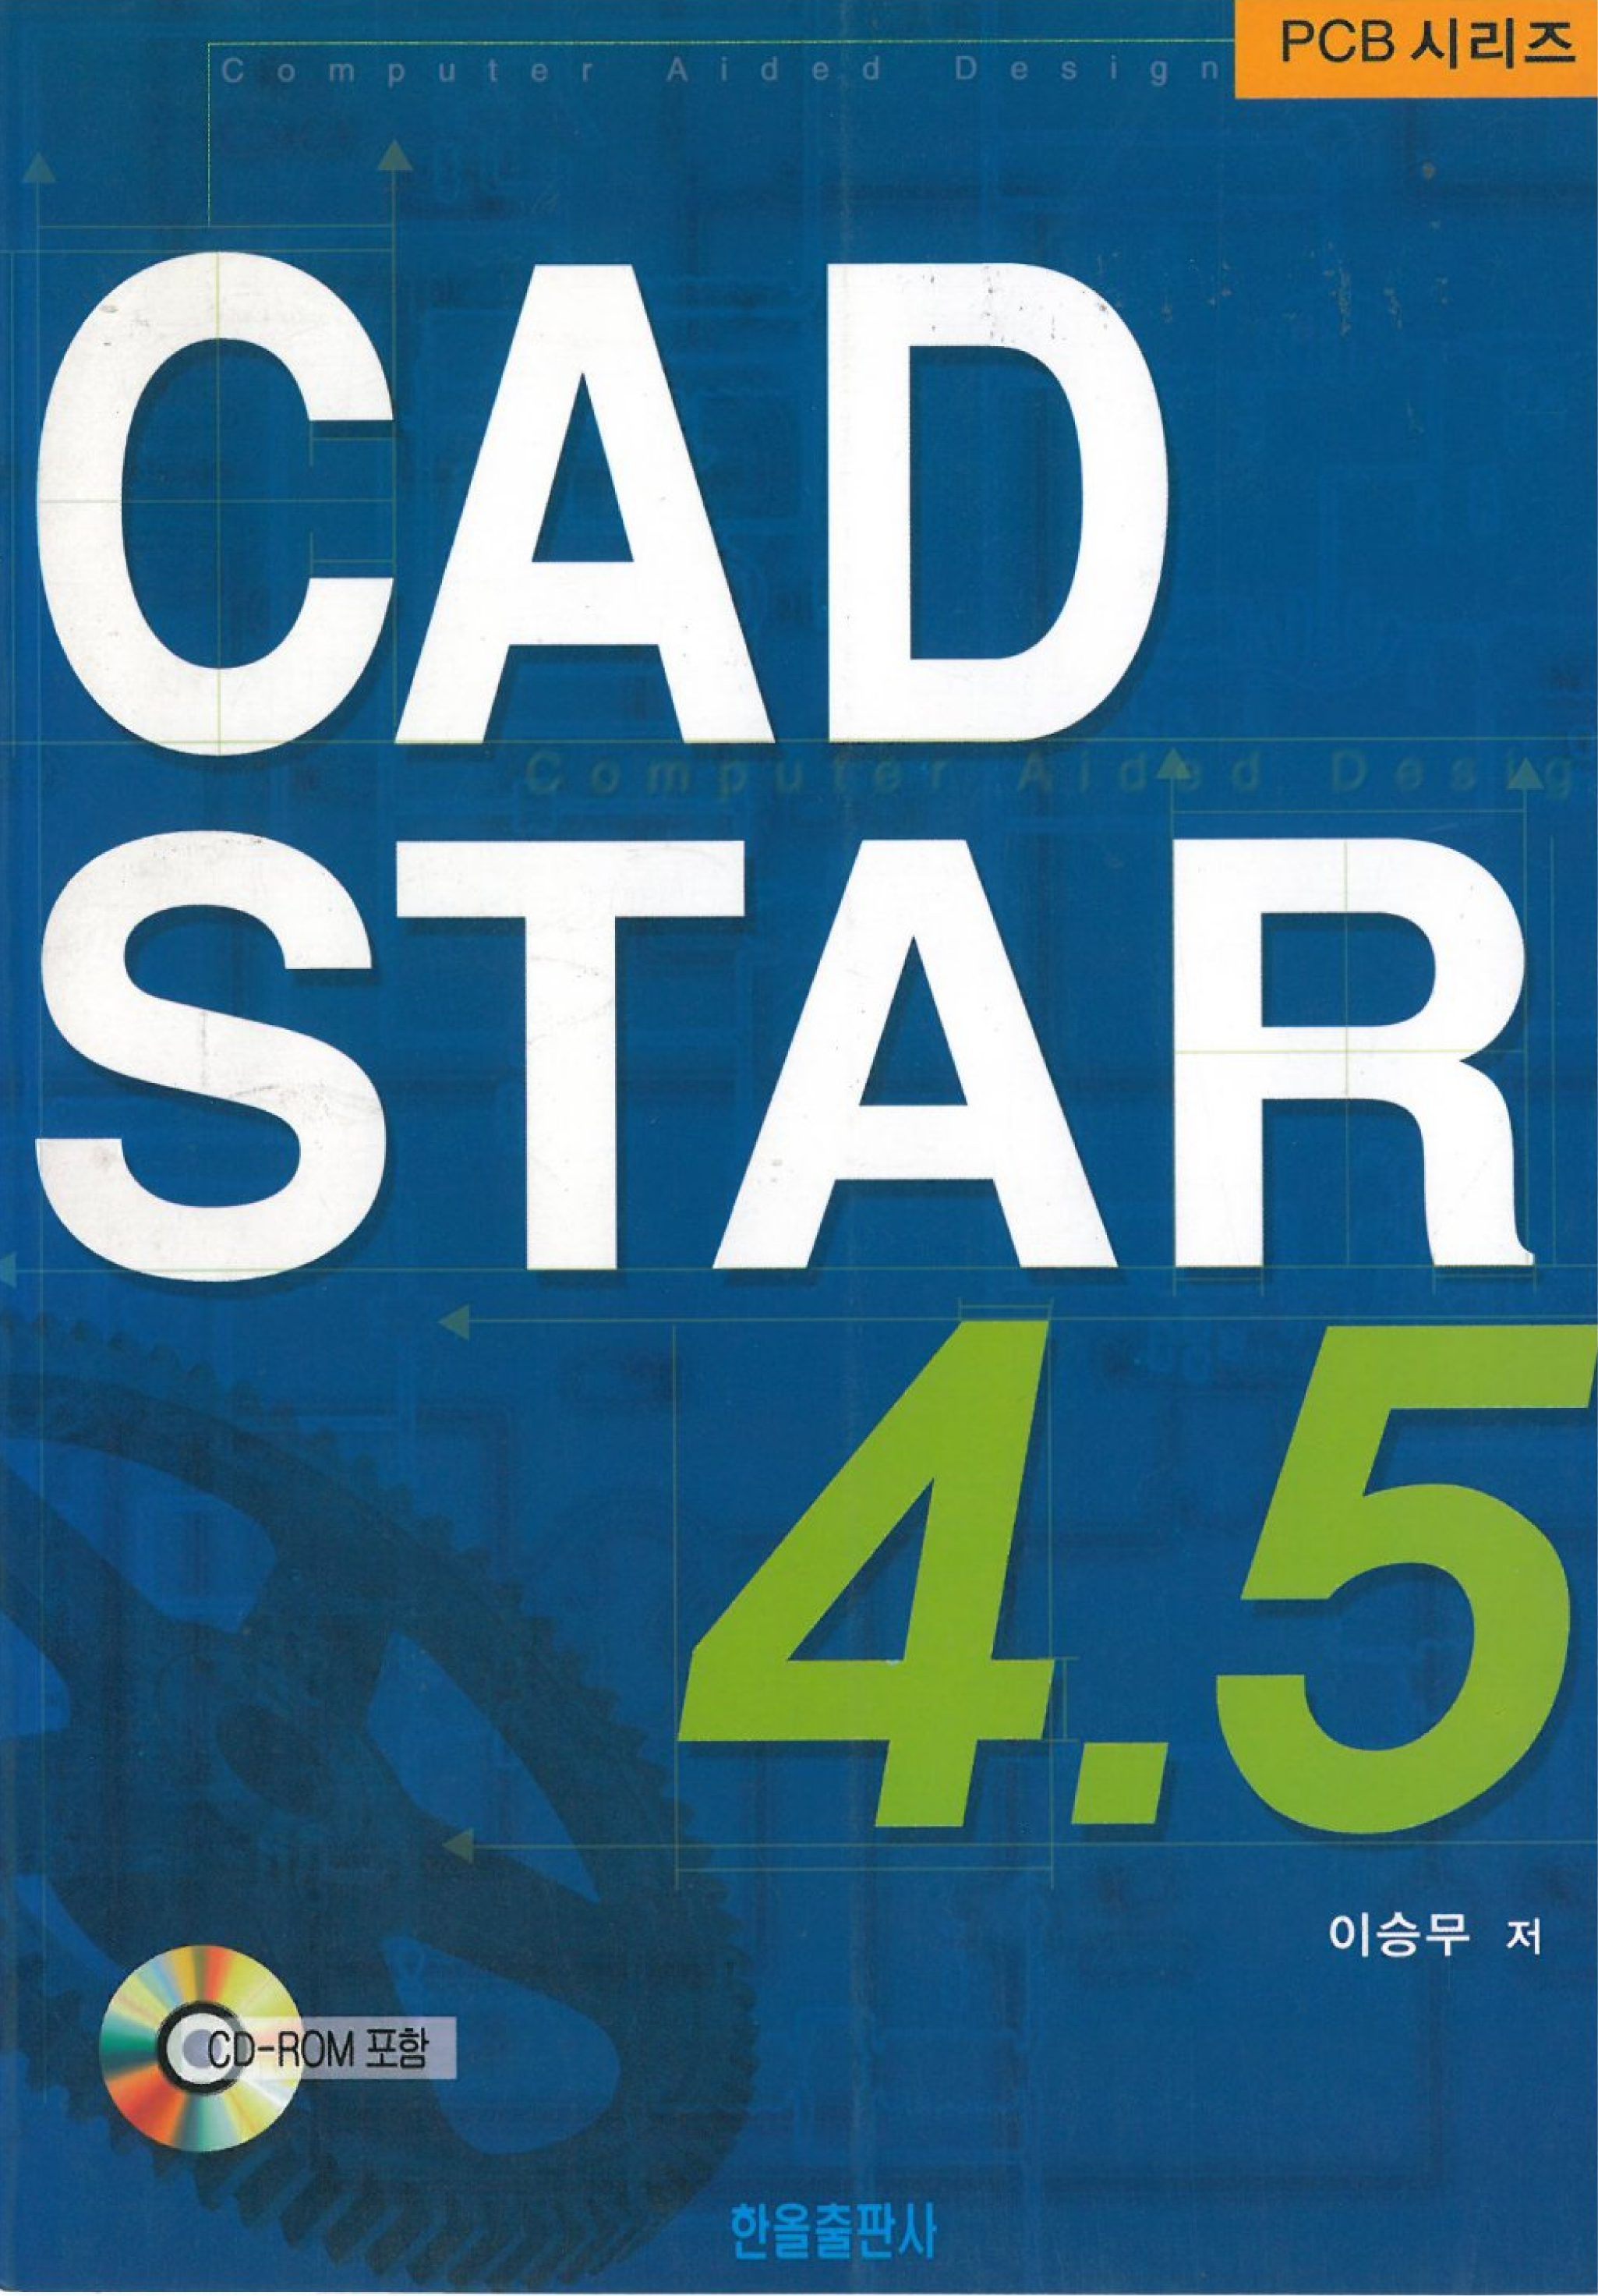 CAD STAR 4.5